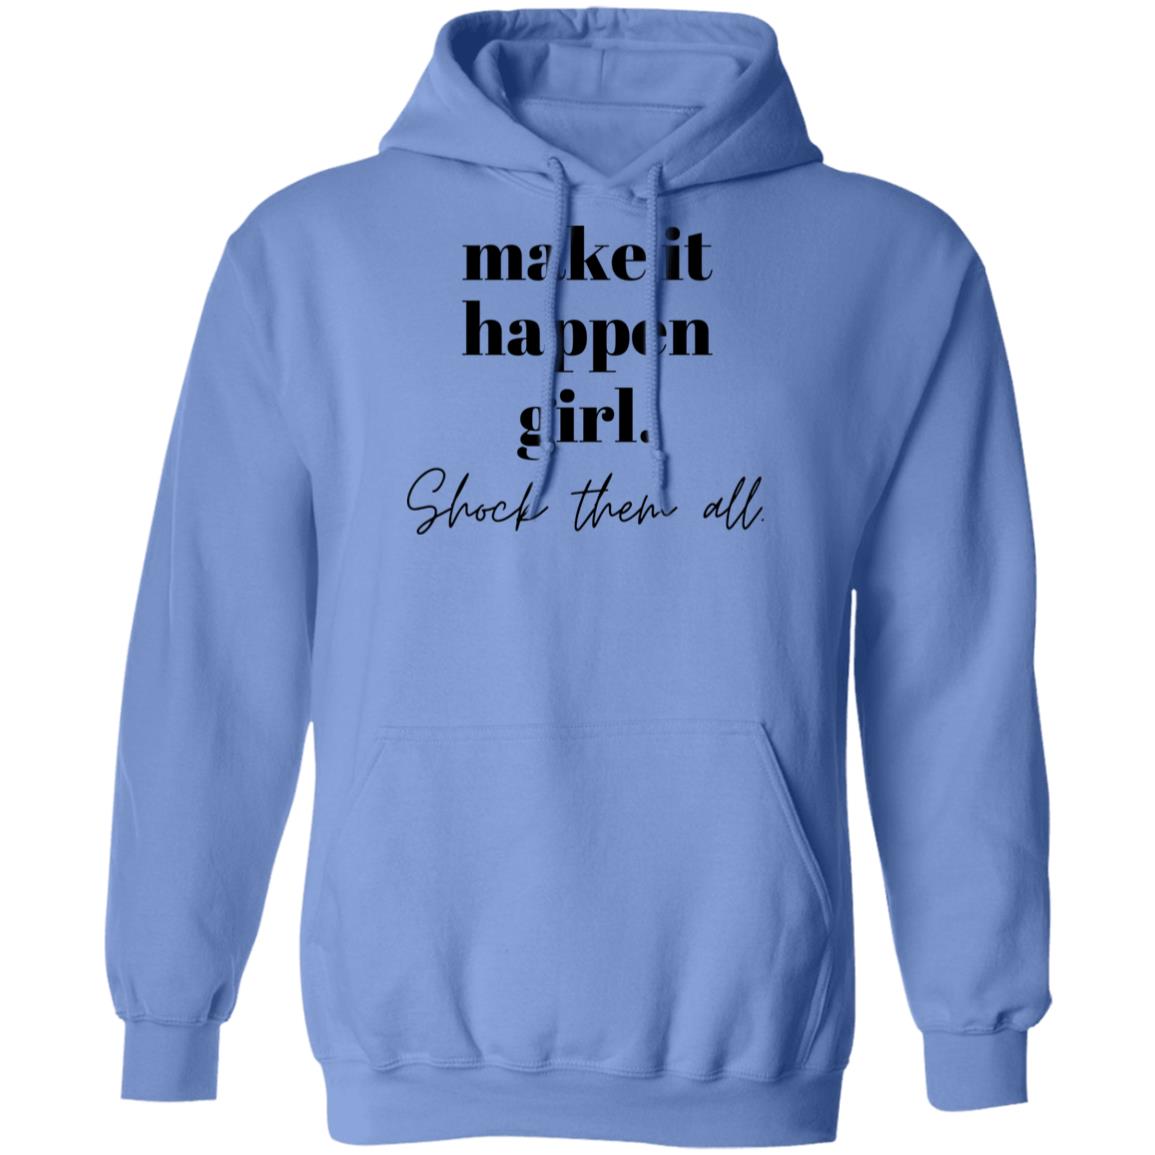 make it happen girl. Shock them all. Hooded Sweatshirt